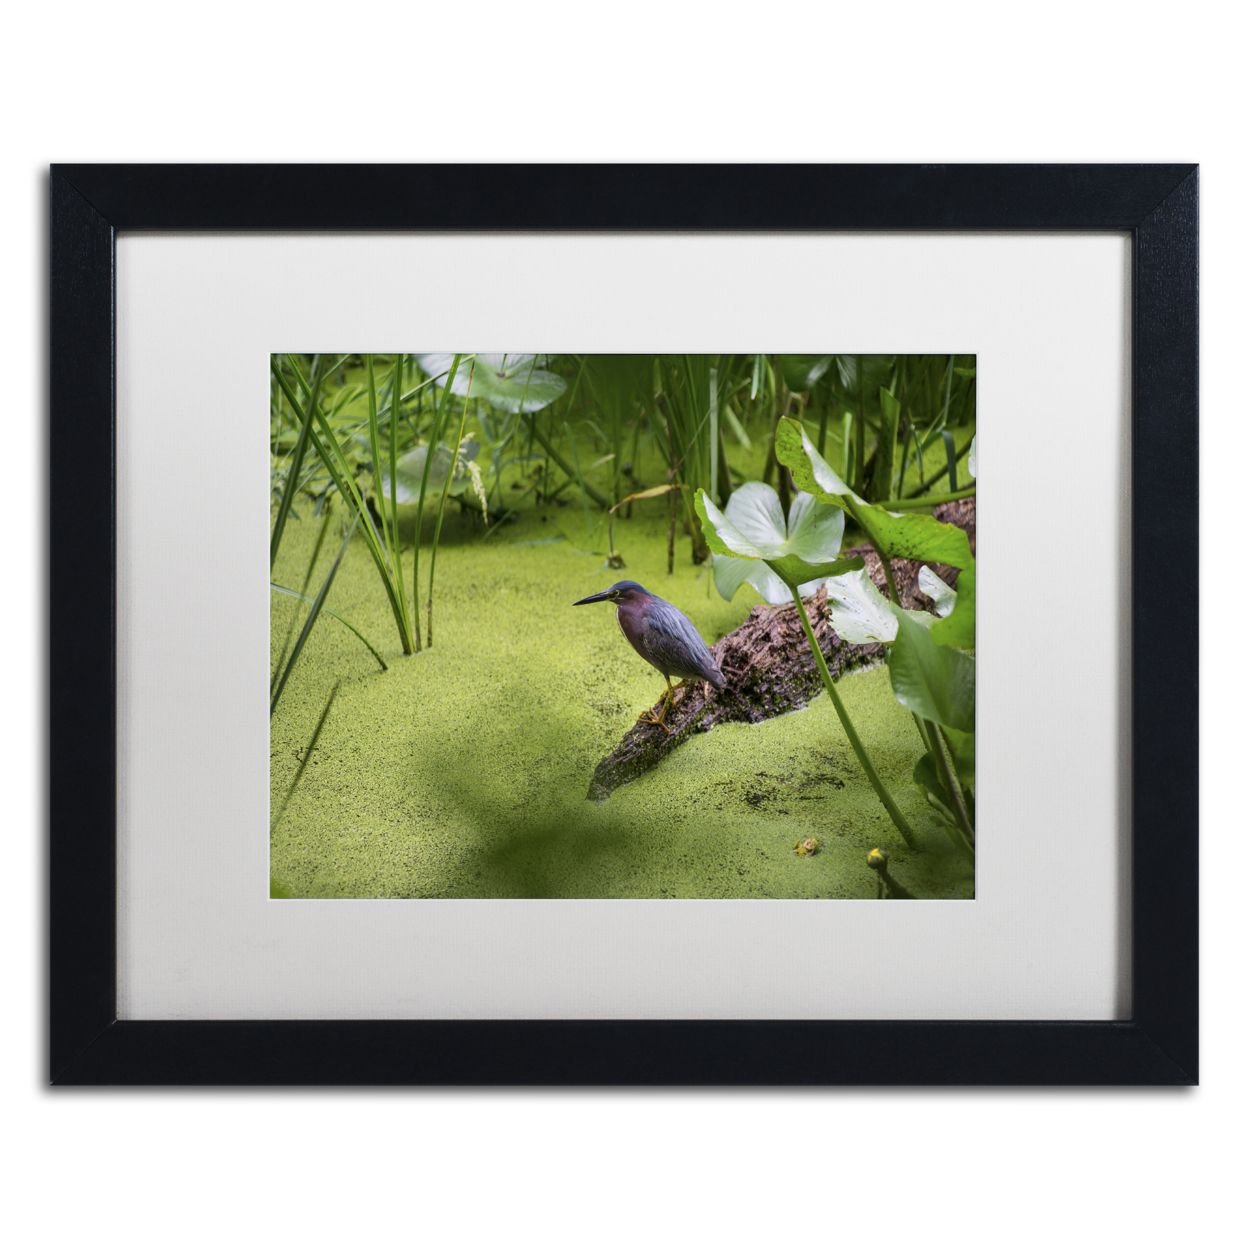 Kurt Shaffer 'Green Heron' Black Wooden Framed Art 18 X 22 Inches